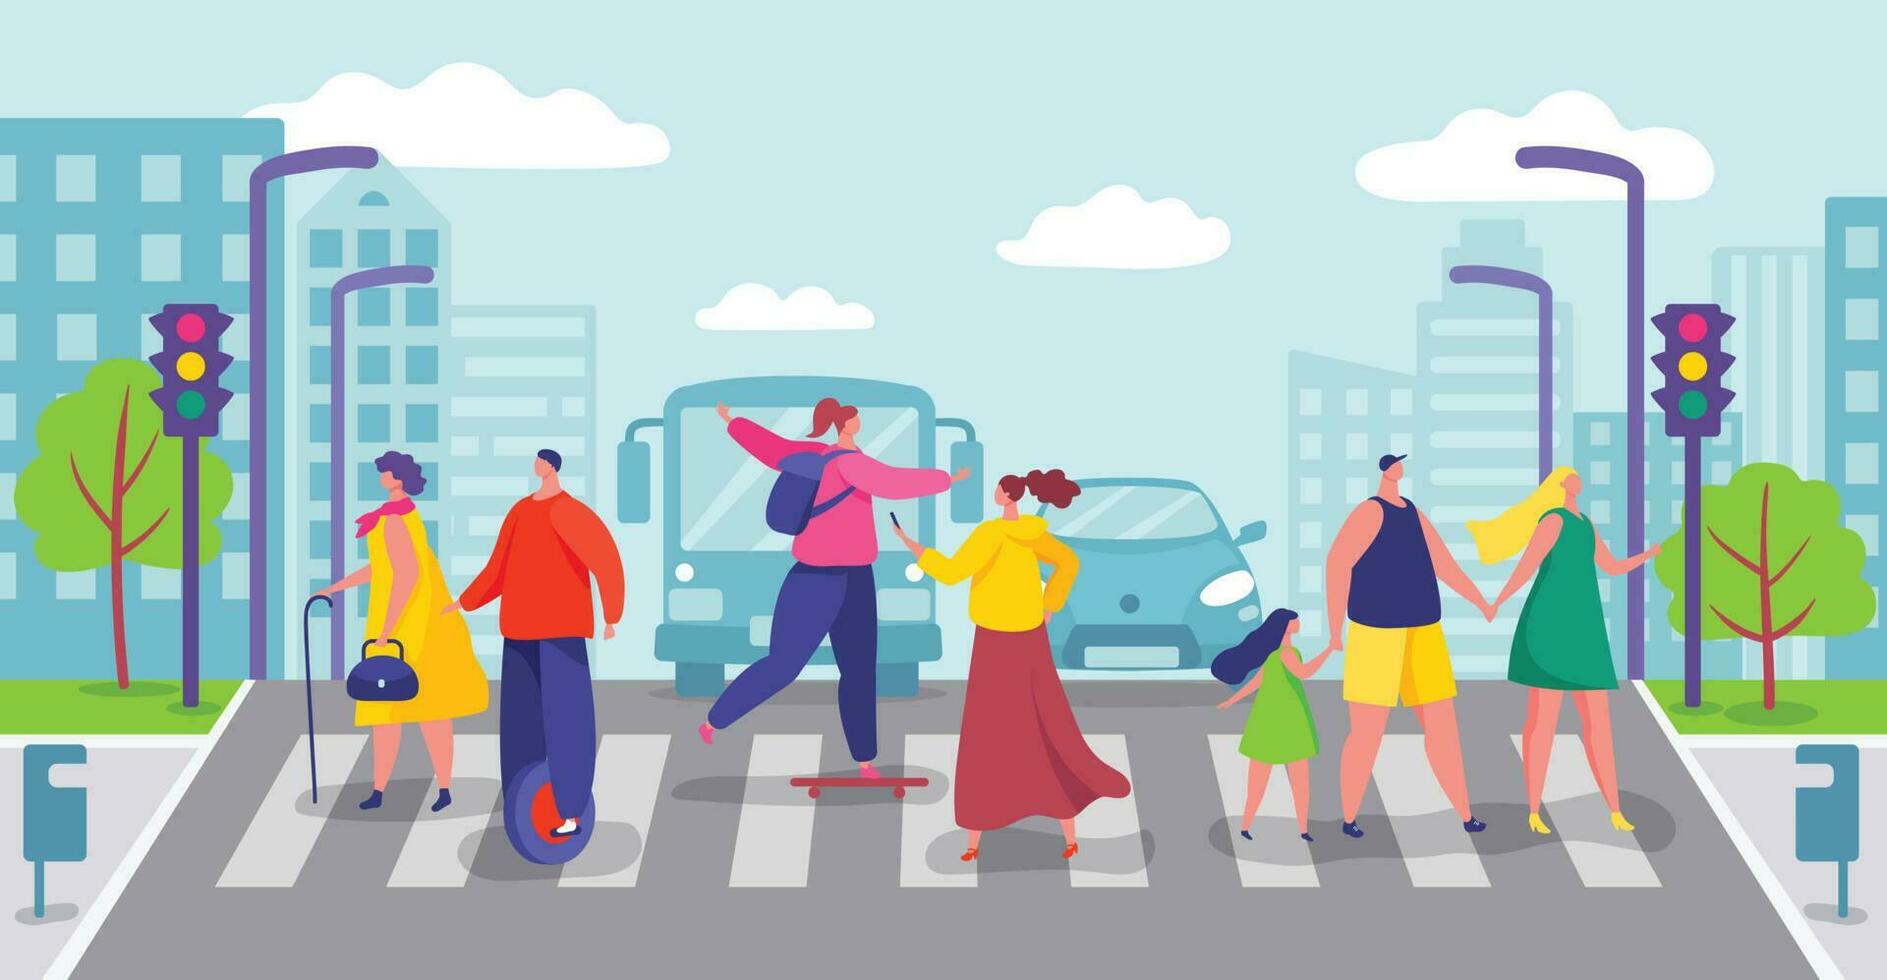 Group of people crossing city road, pedestrians walking on crosswalk. Characters cross street on pedestrian crossing Vector illustration